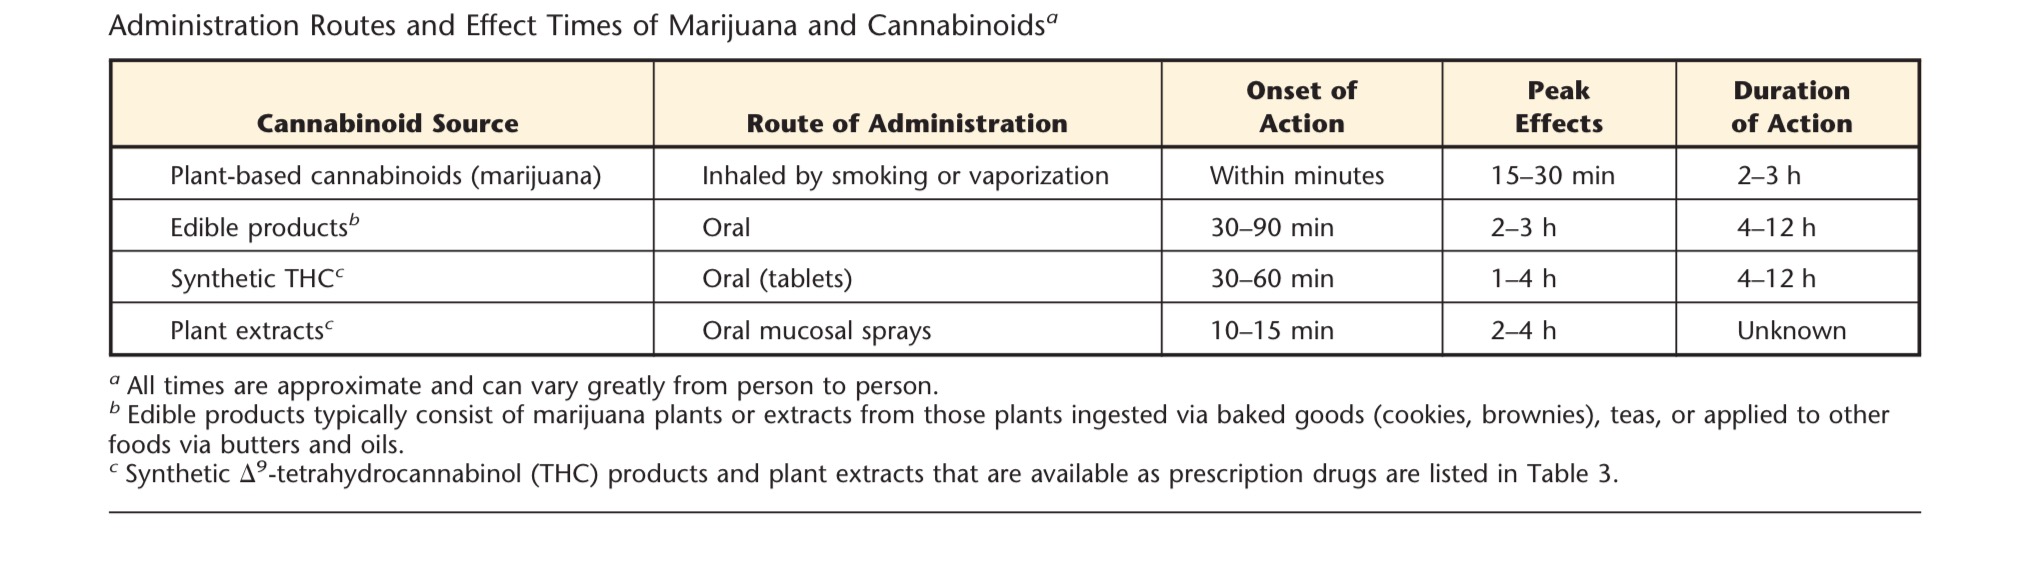 Cannabinoid Administration route .jpg